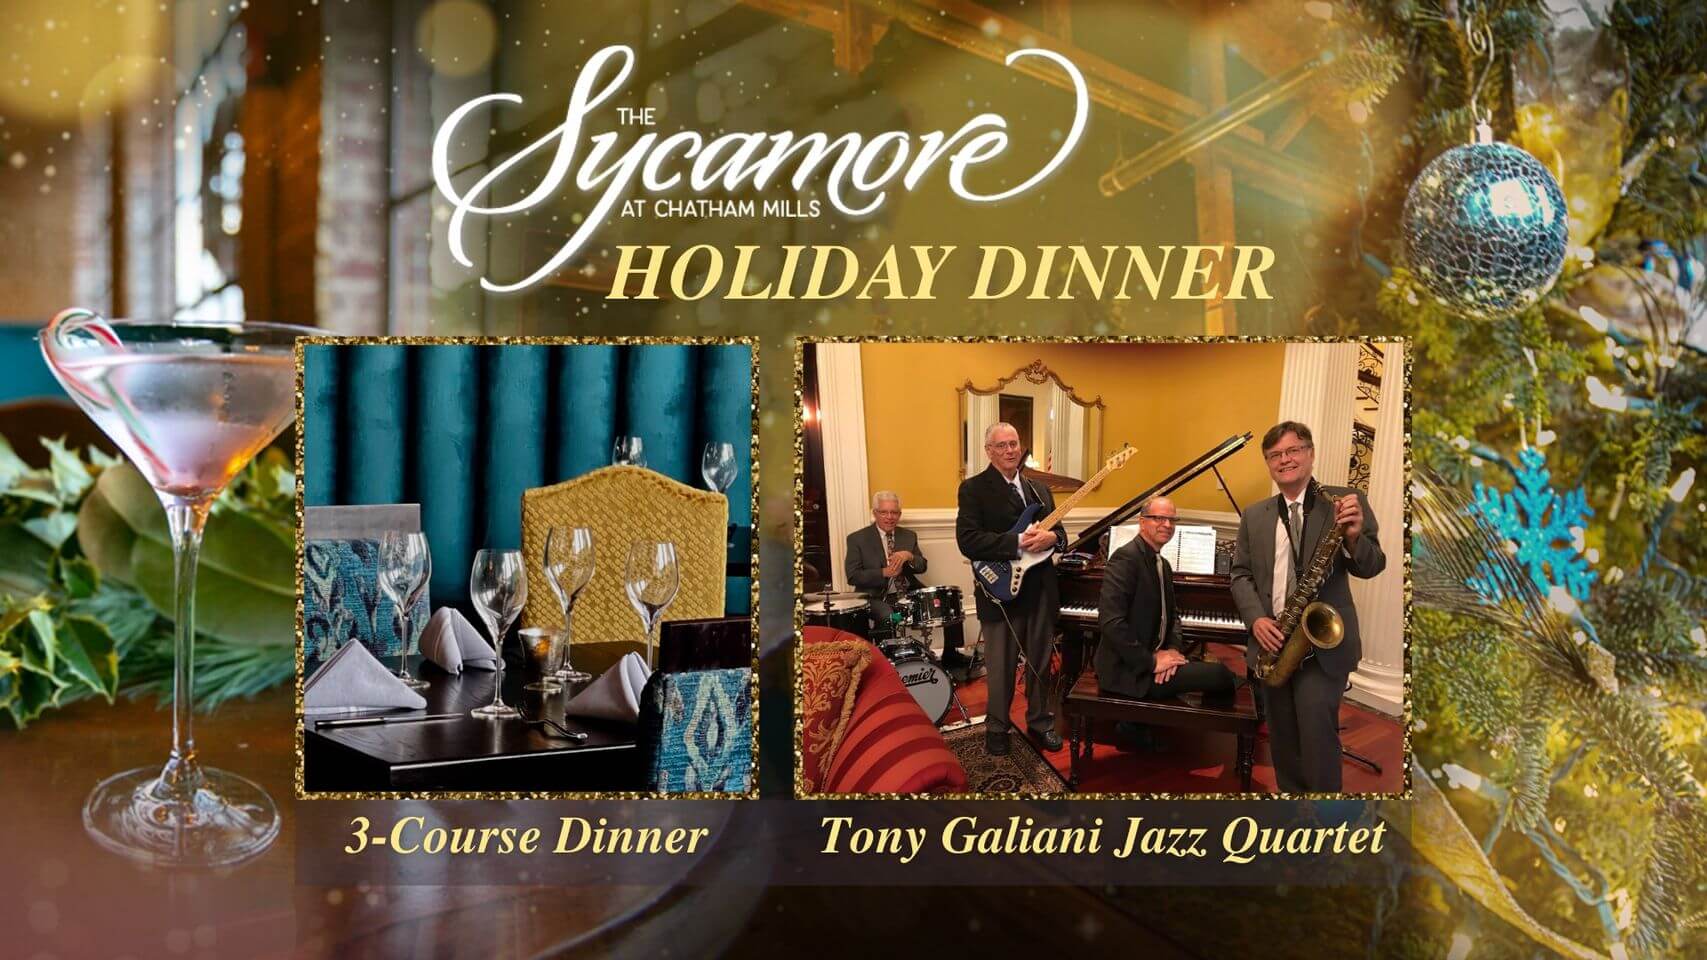 December 15 holiday menu and music at The Sycamore.